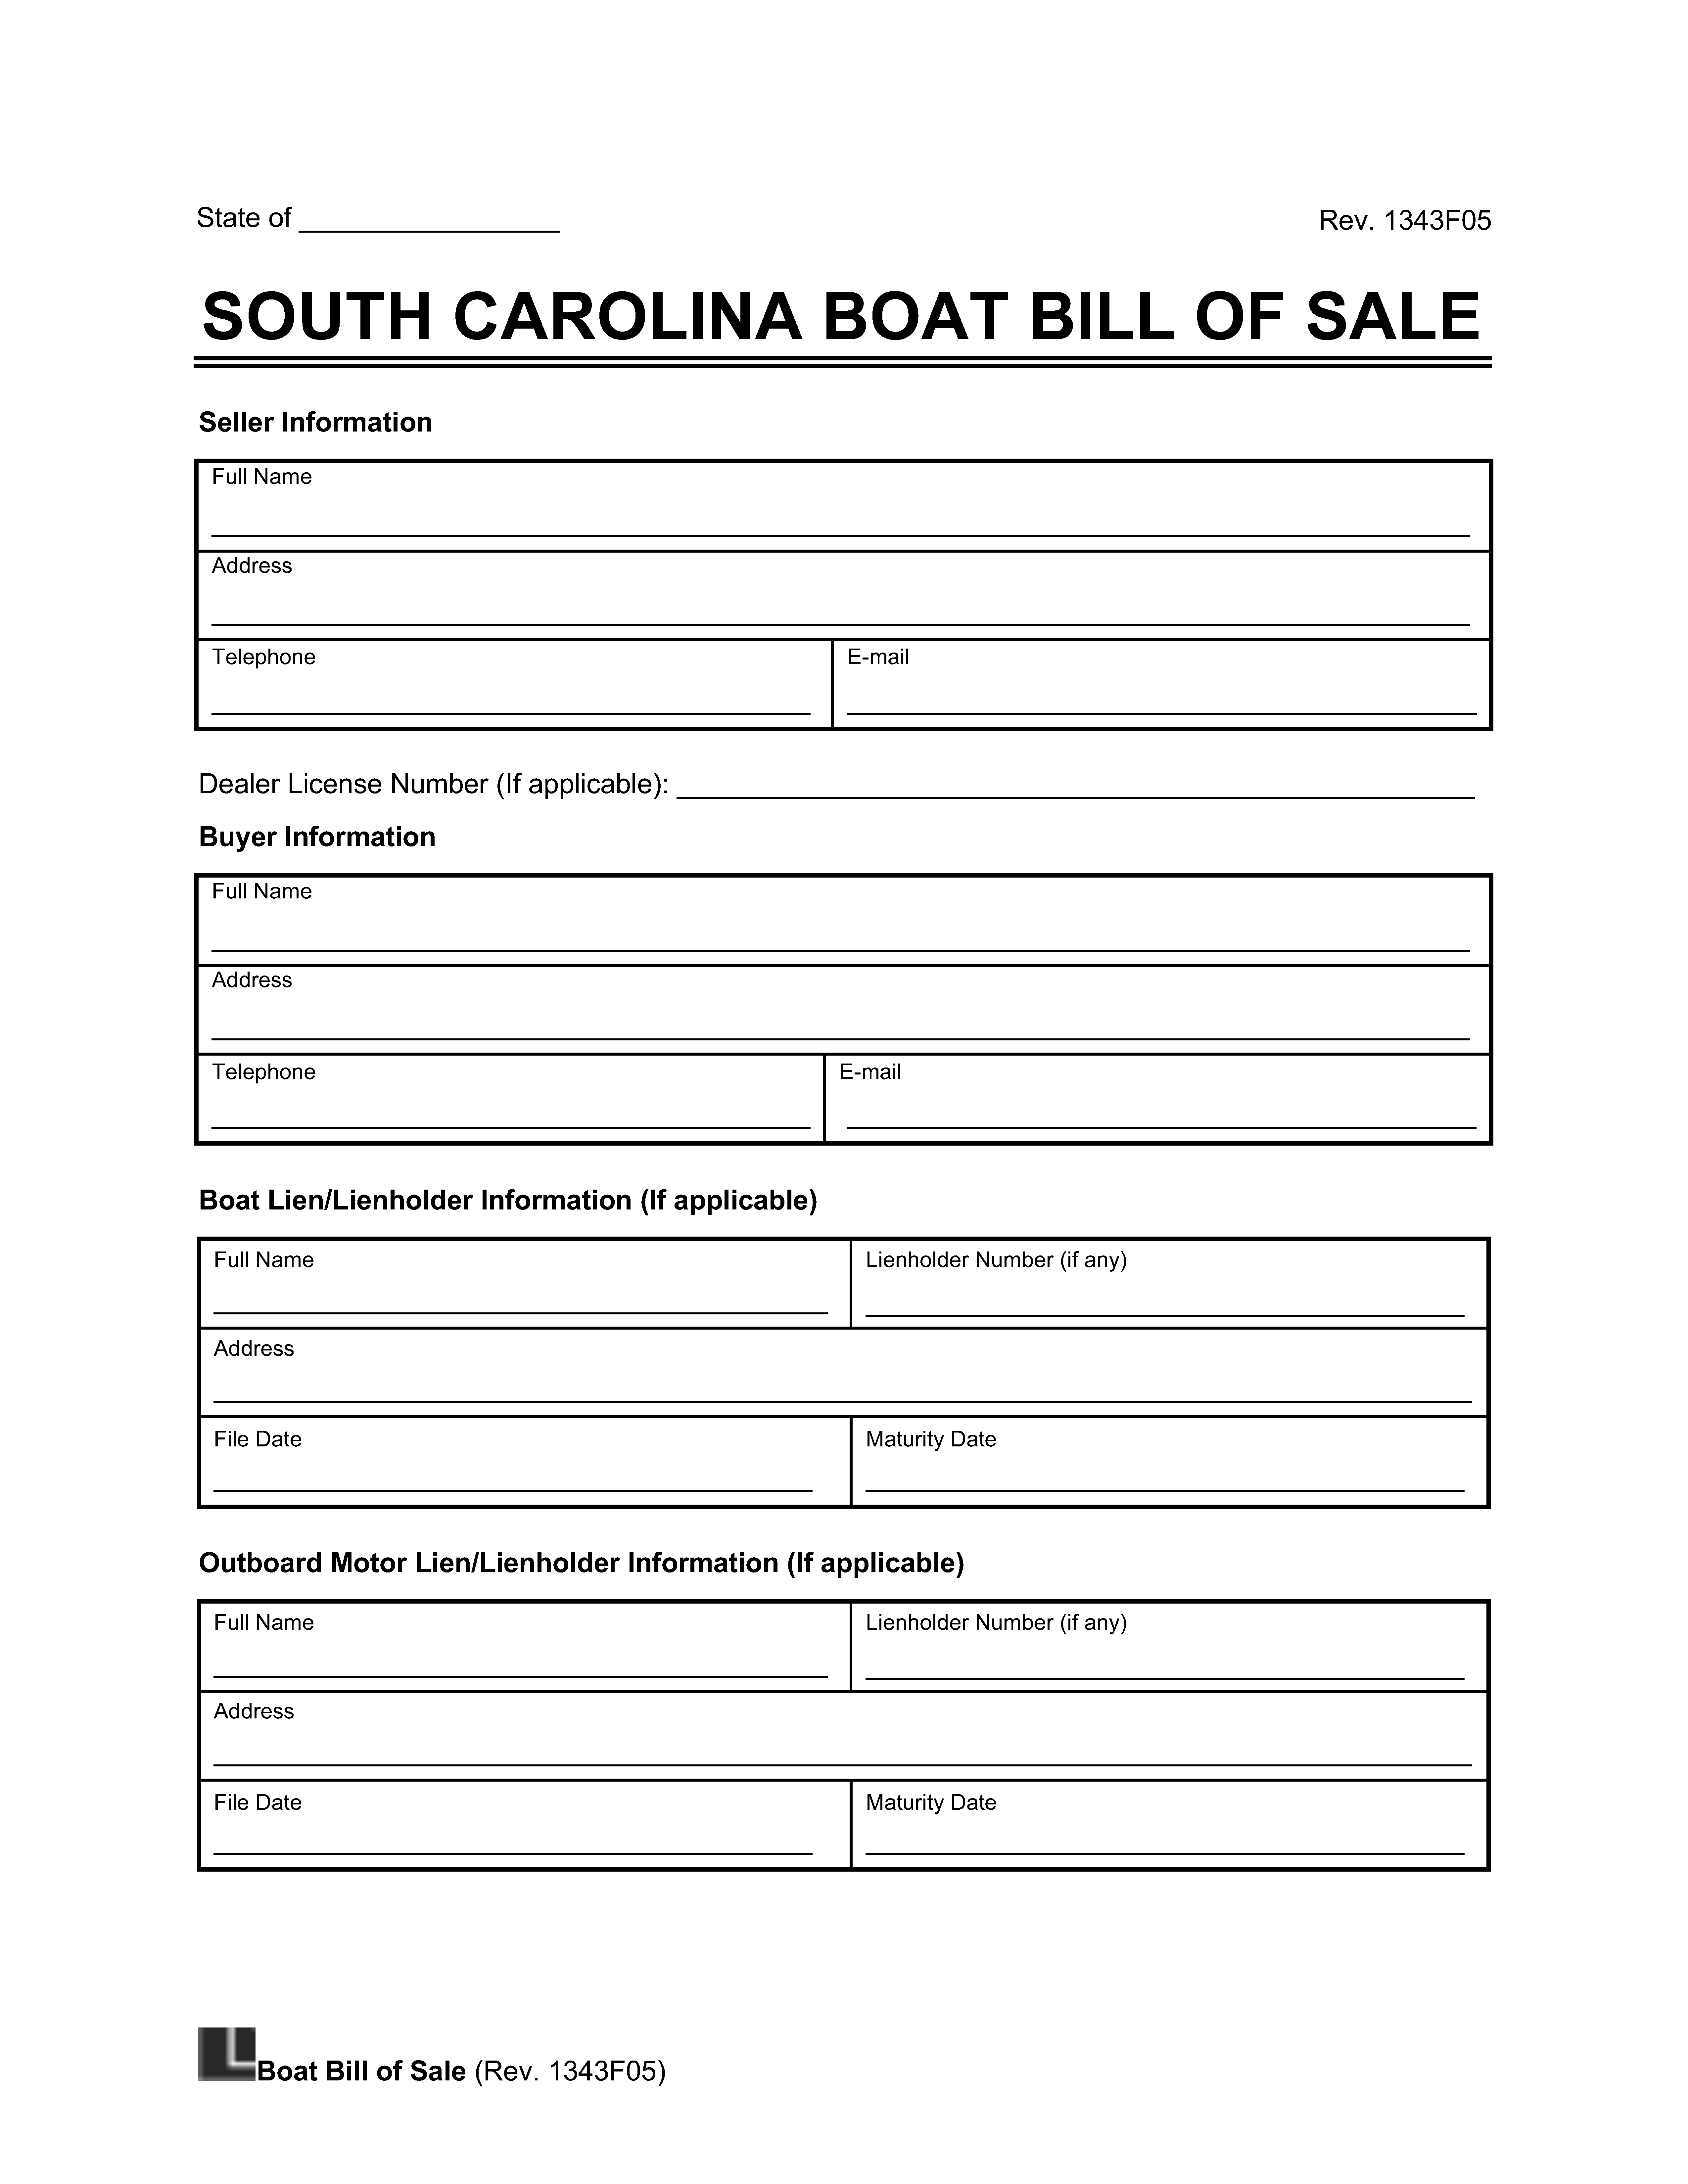 South Carolina boat bill of sale screenshot